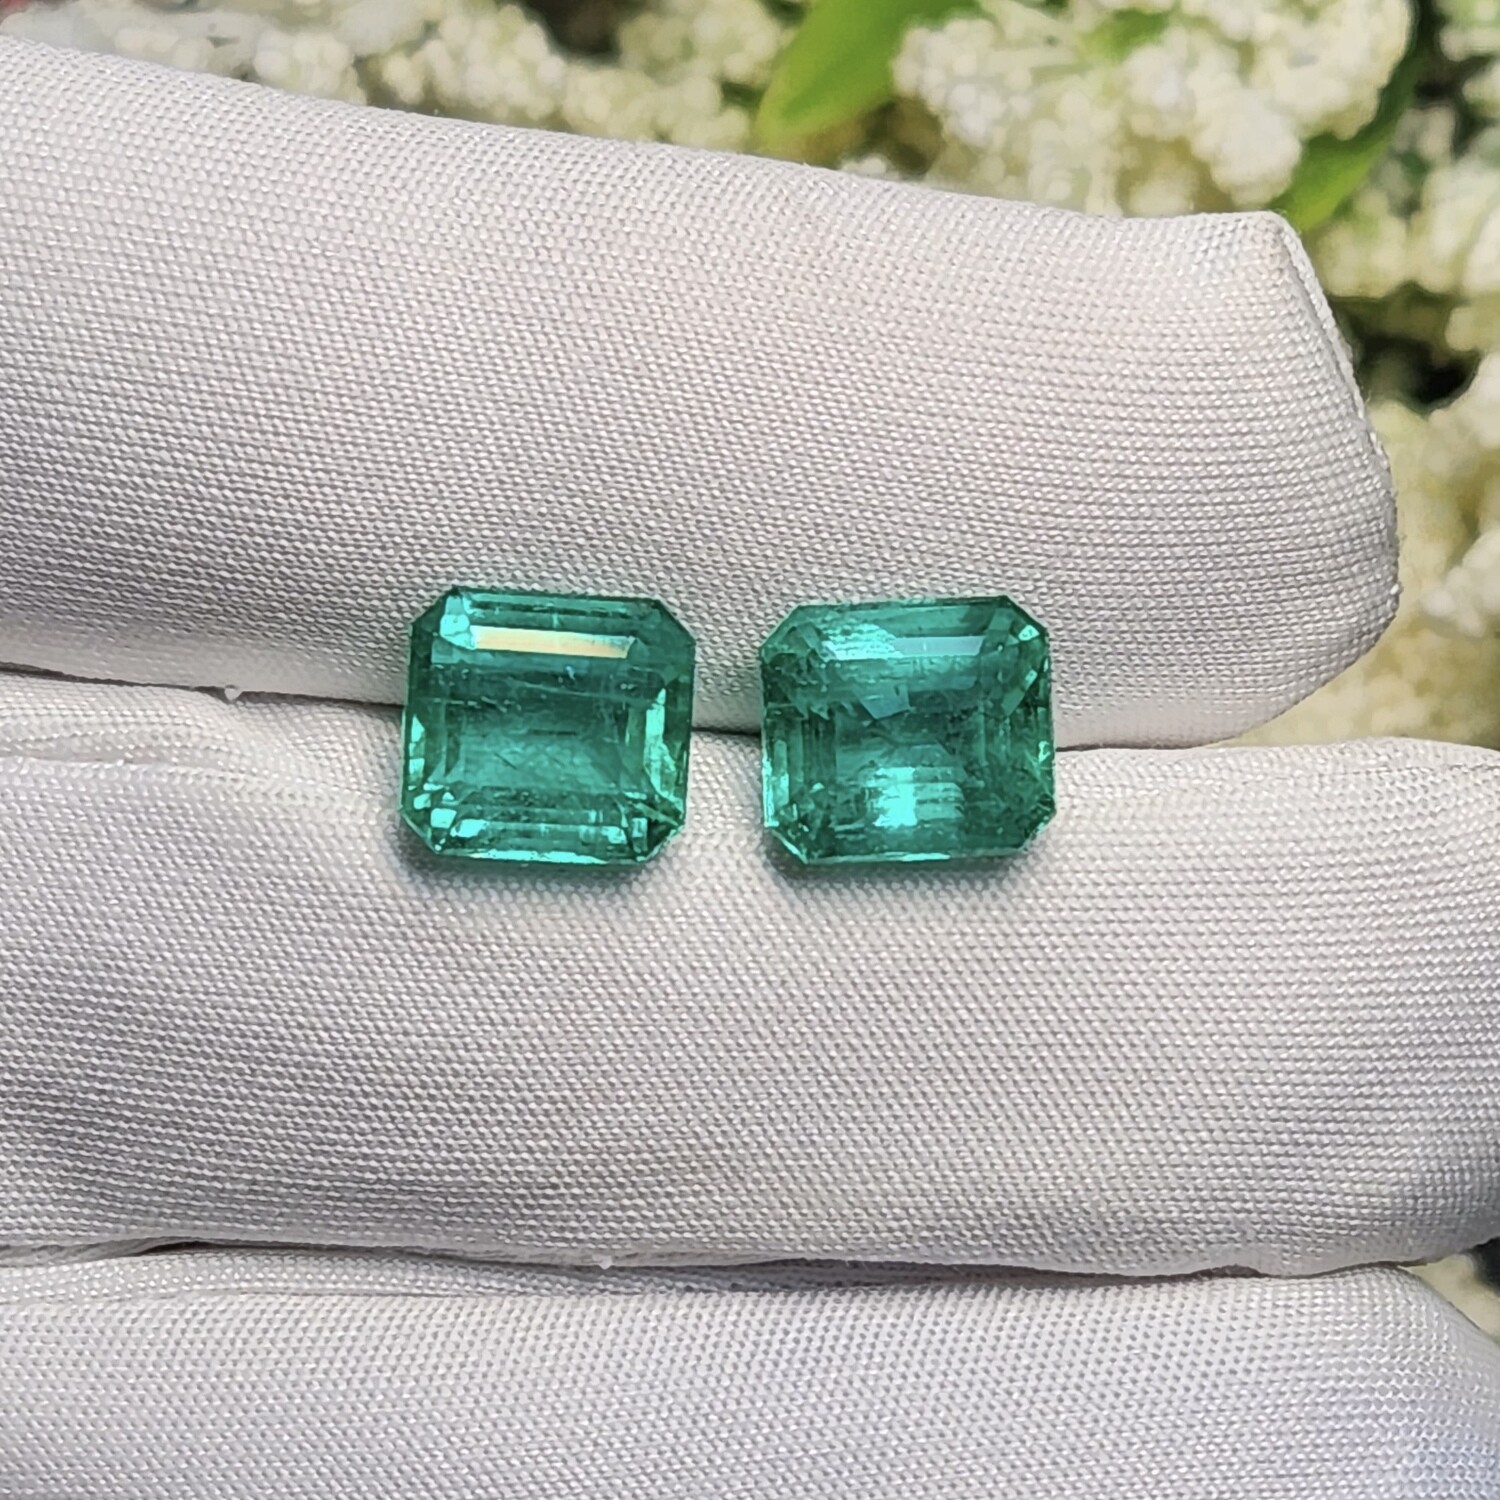 Sq. Emerald cut 7.71 ct